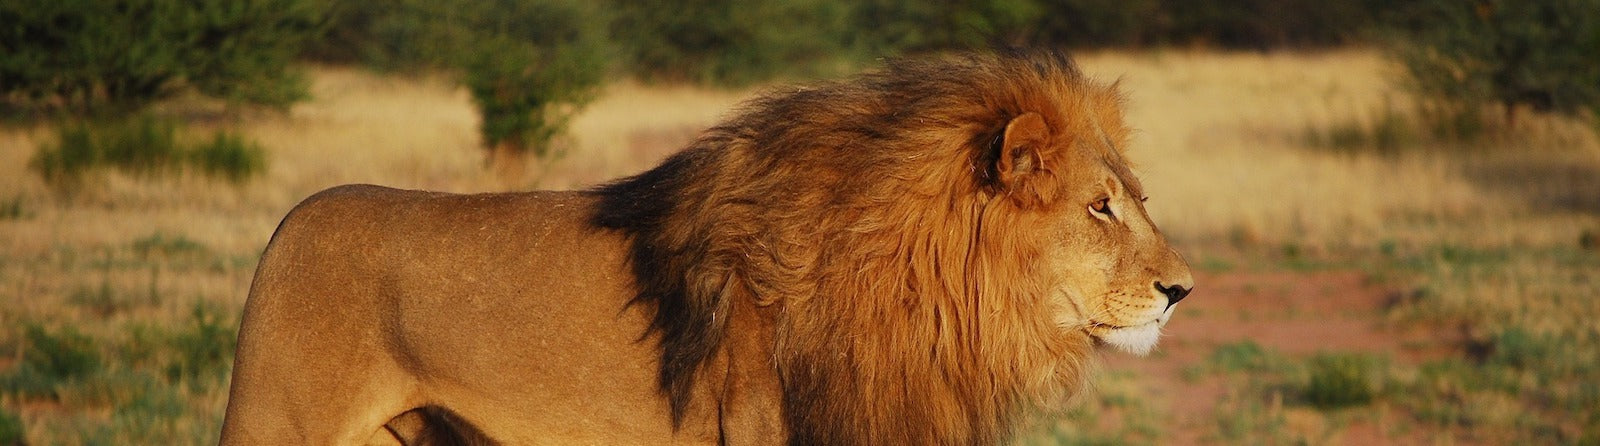 Roi Lion qui domine ferocement le territoire